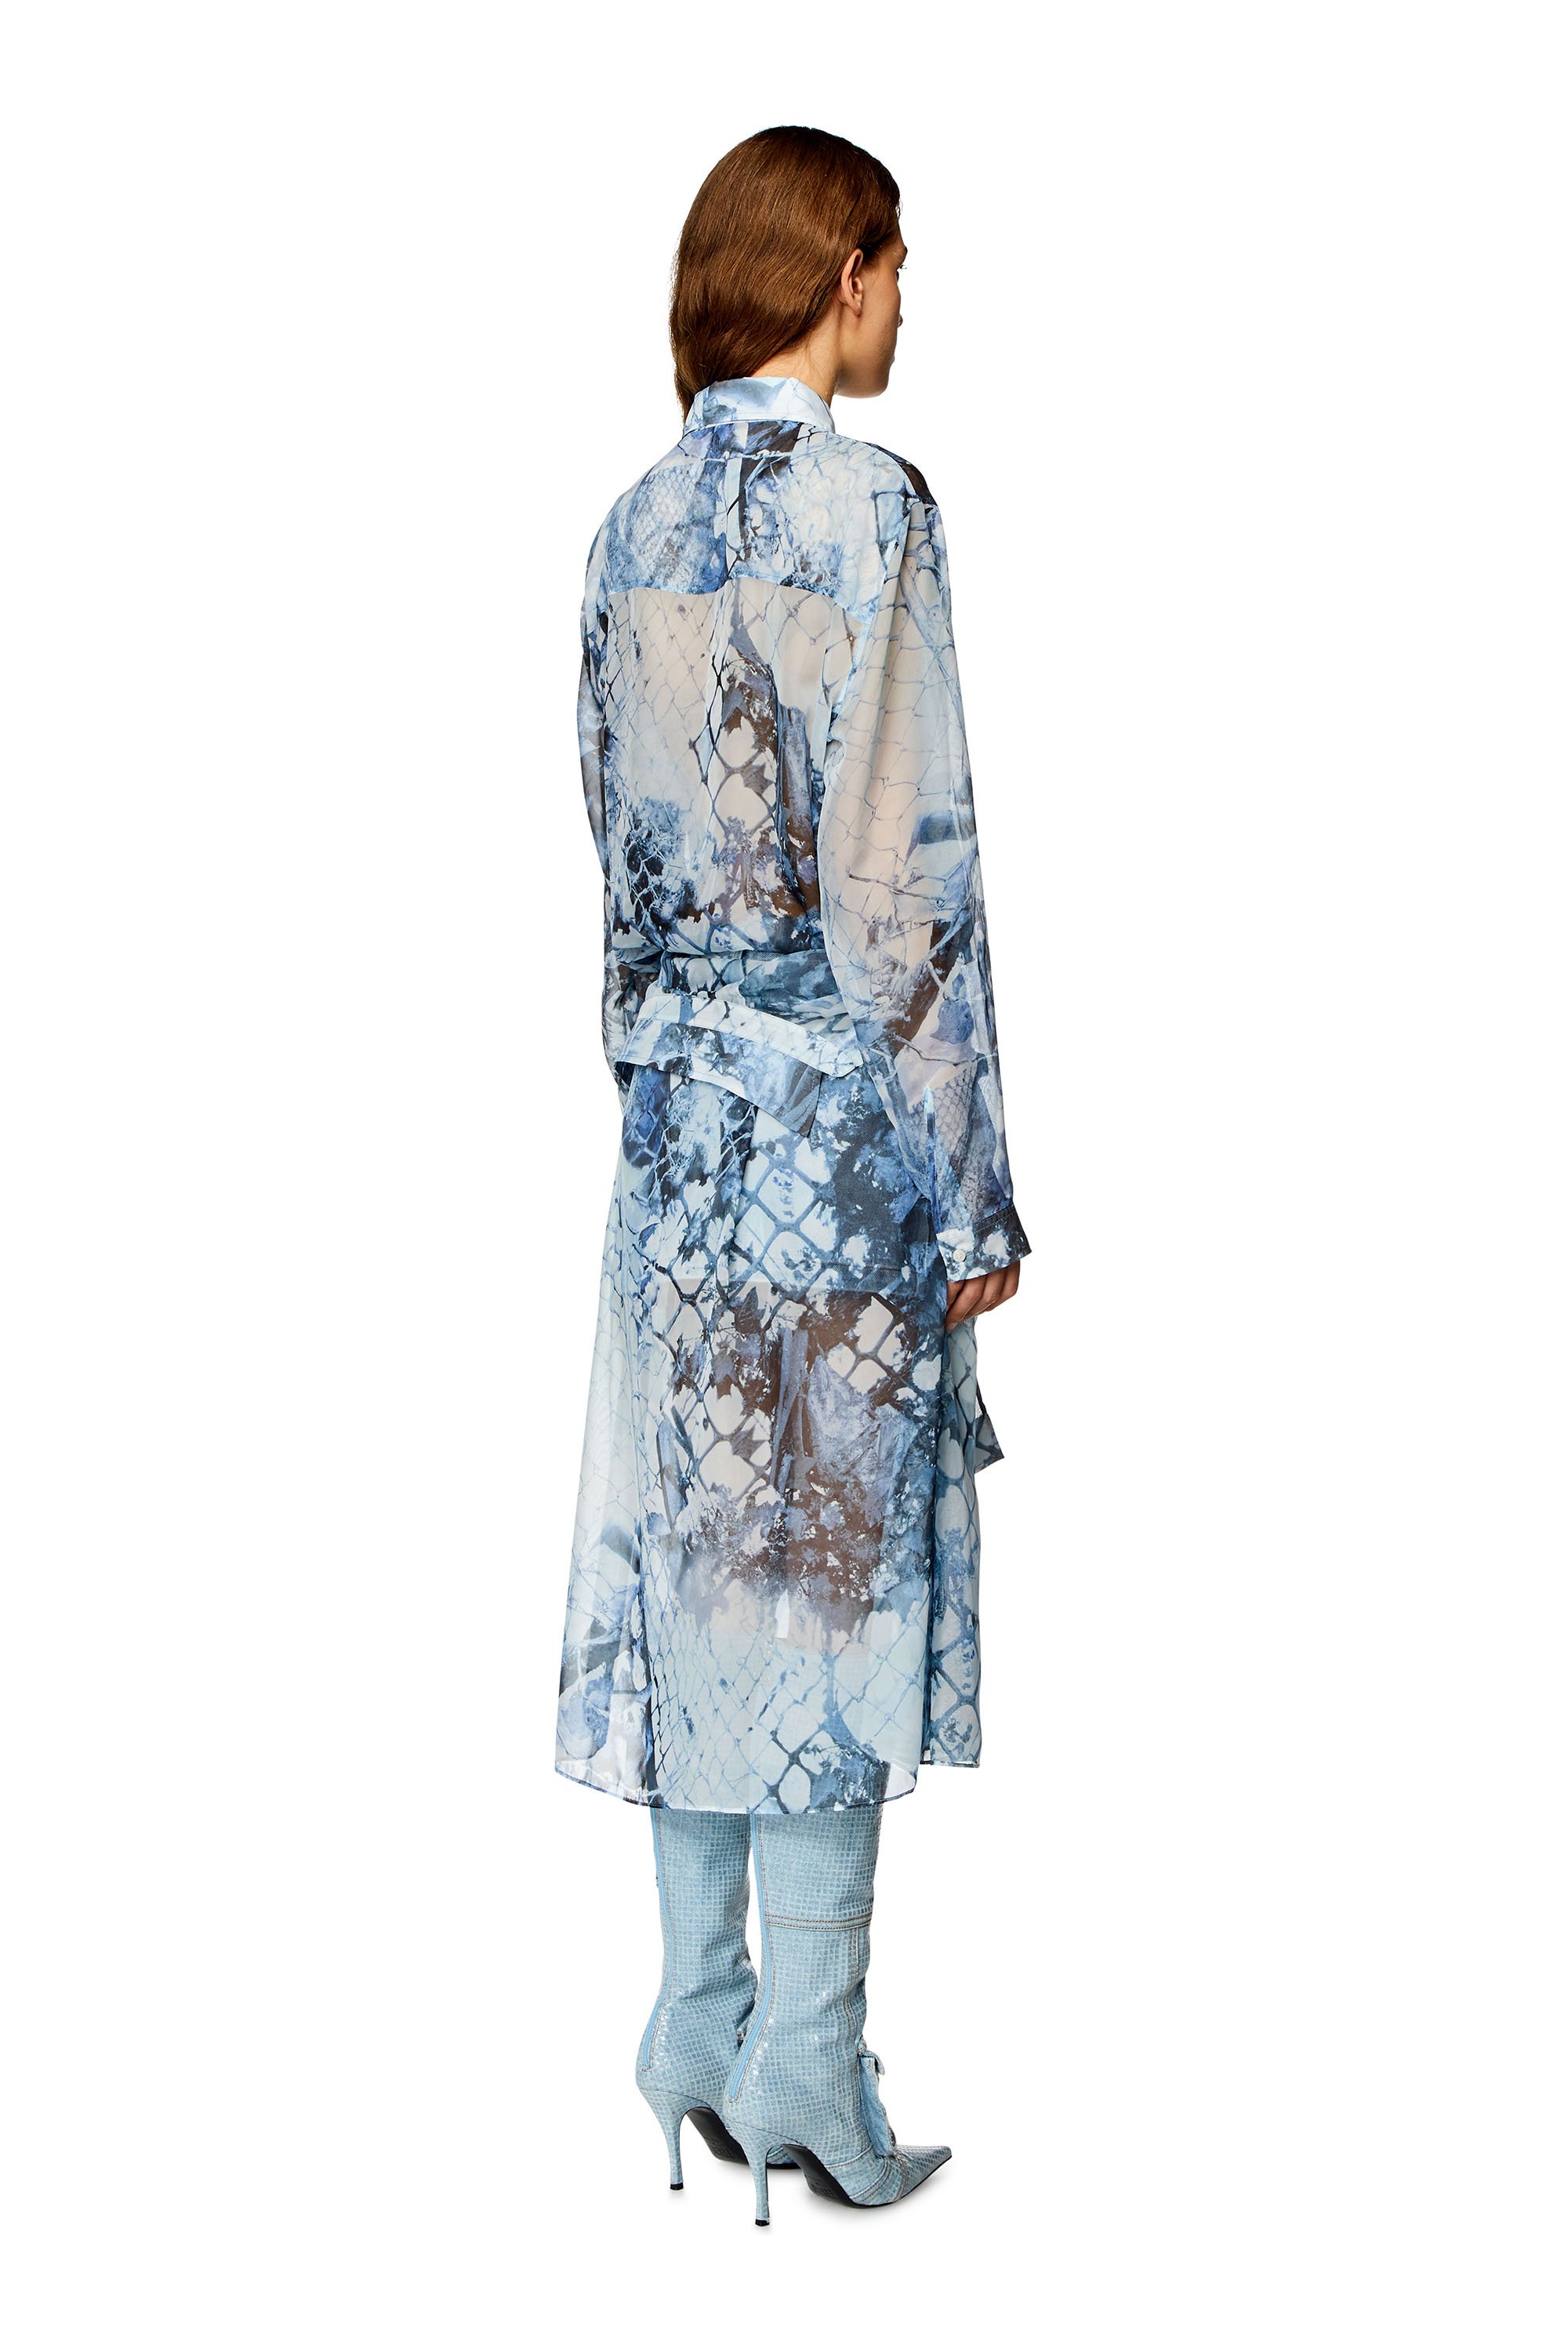 Diesel - D-JEANIEL, Woman Short shirt dress in chiffon and denim in Blue - Image 3